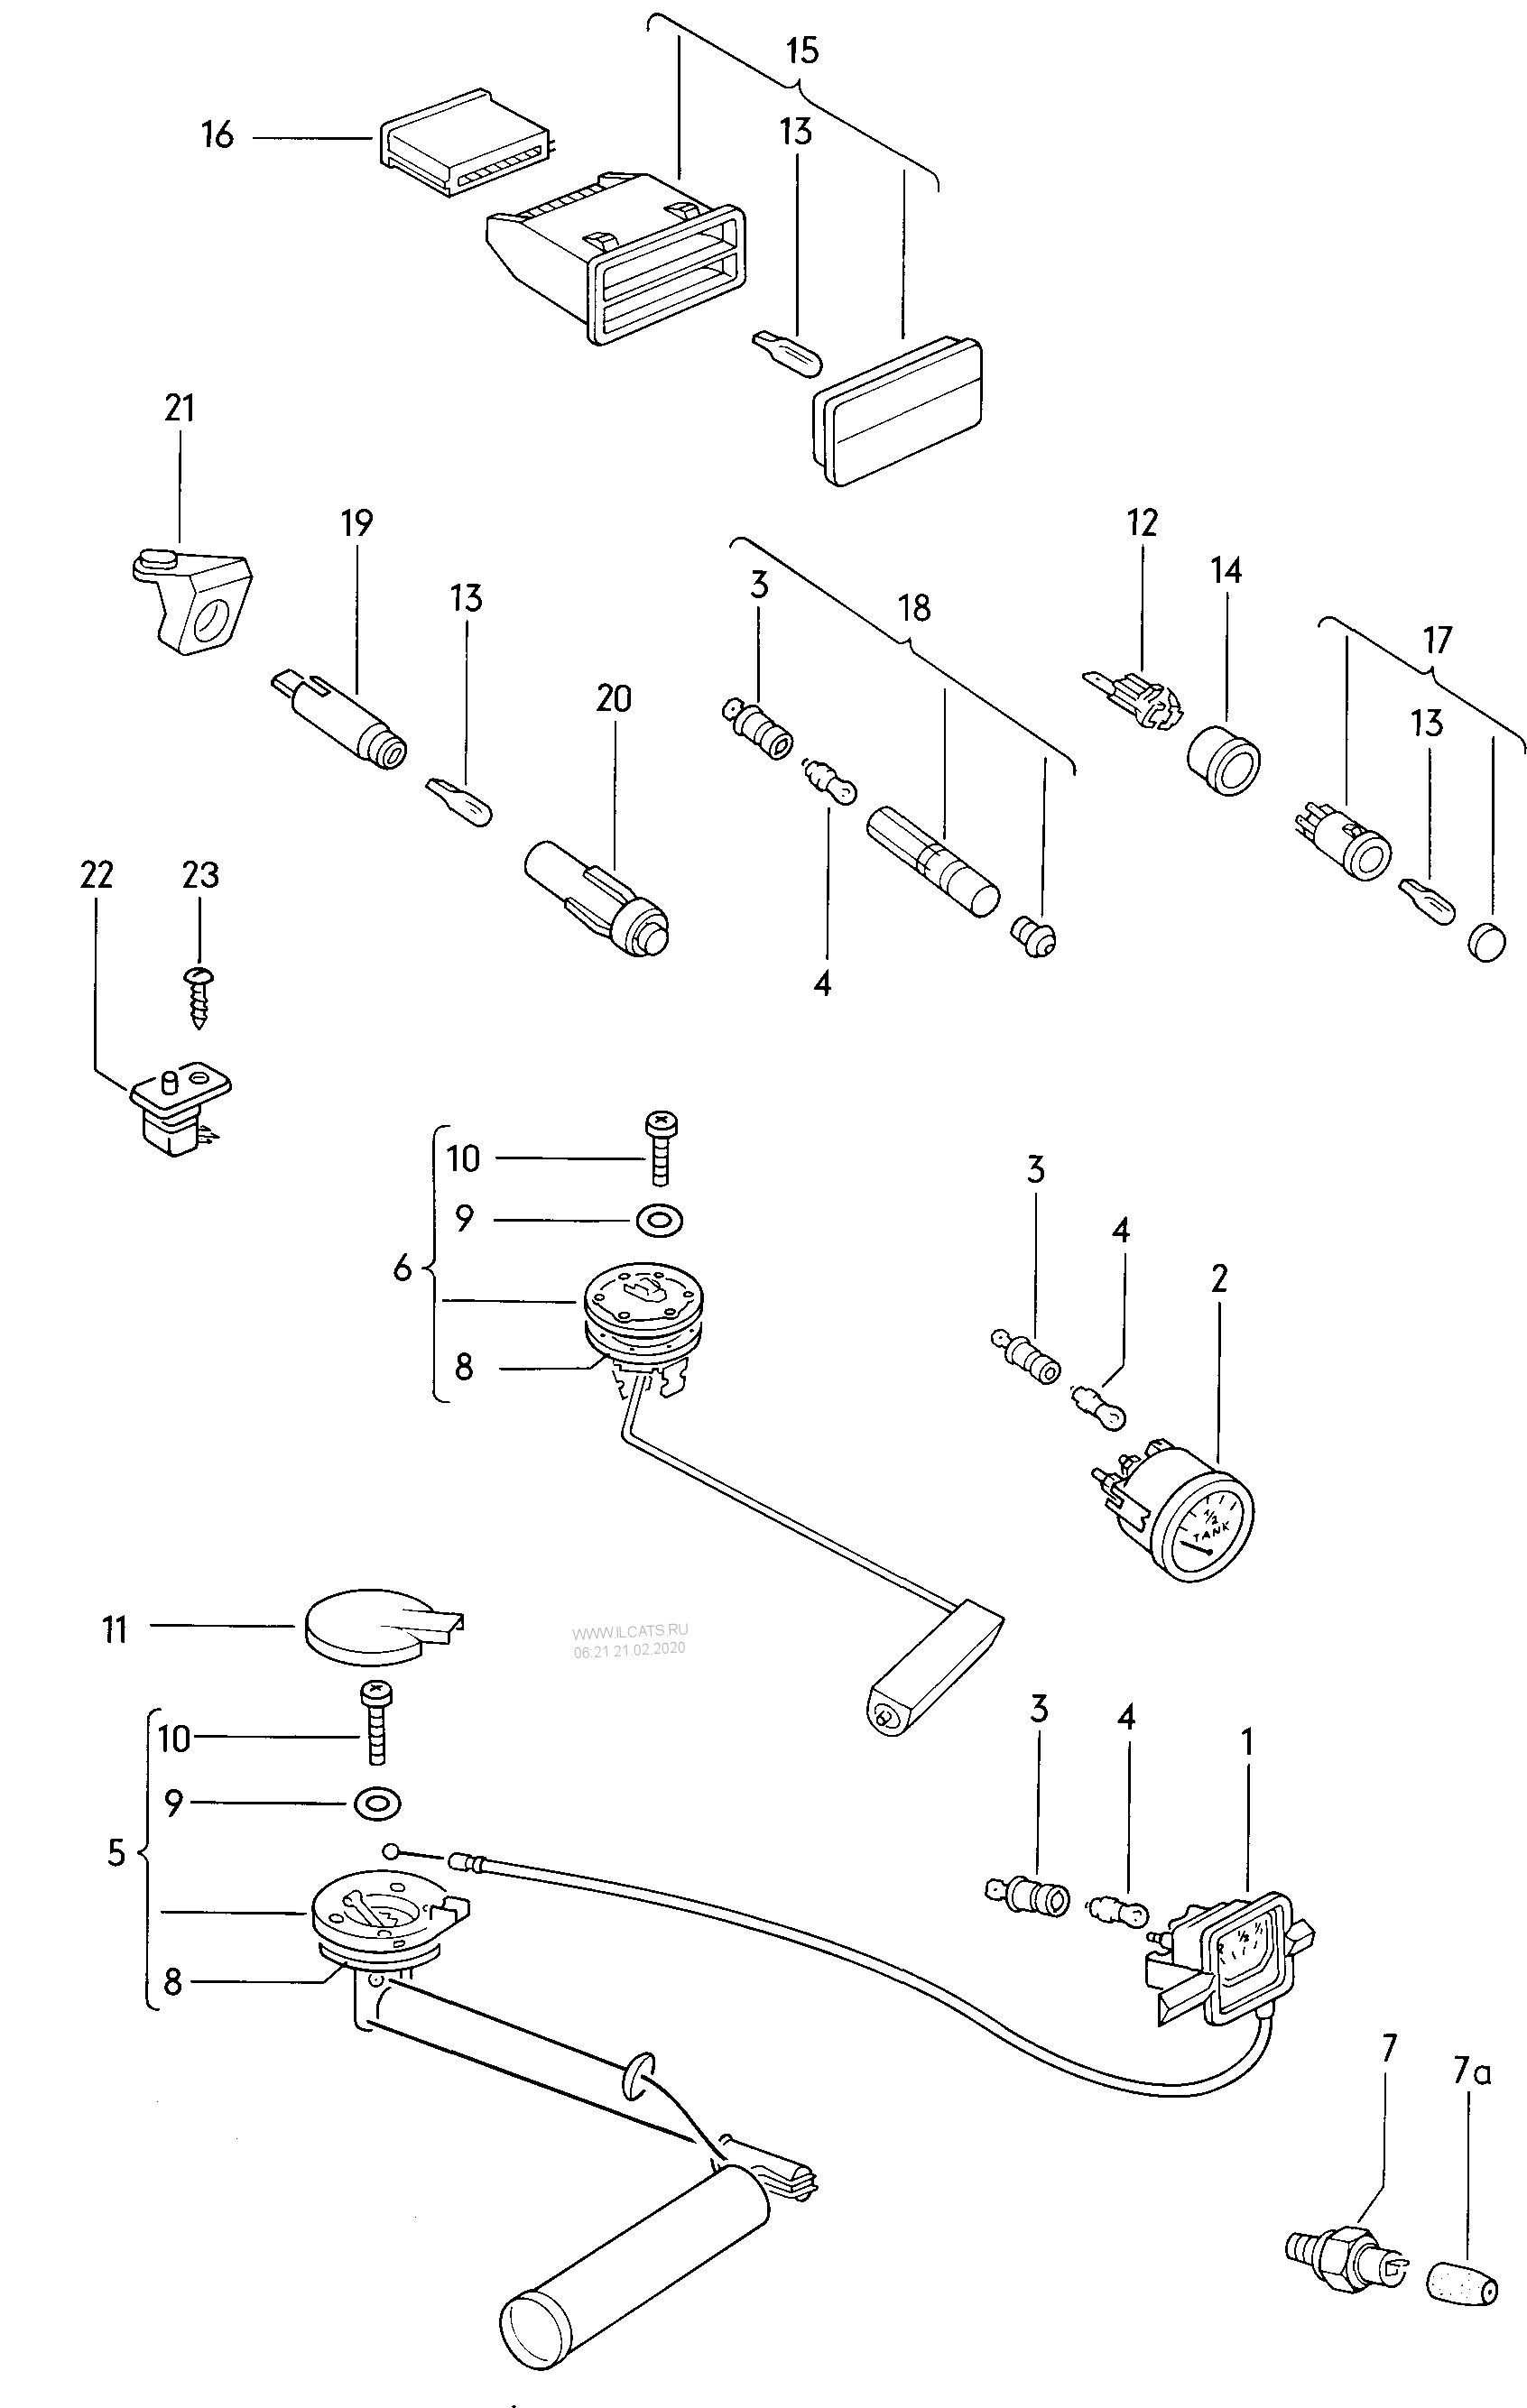 Vdo Oil Pressure Gauge Wiring Instructions Ob 2945] Oil Pressure Sender Switch Schematic Wiring Diagram